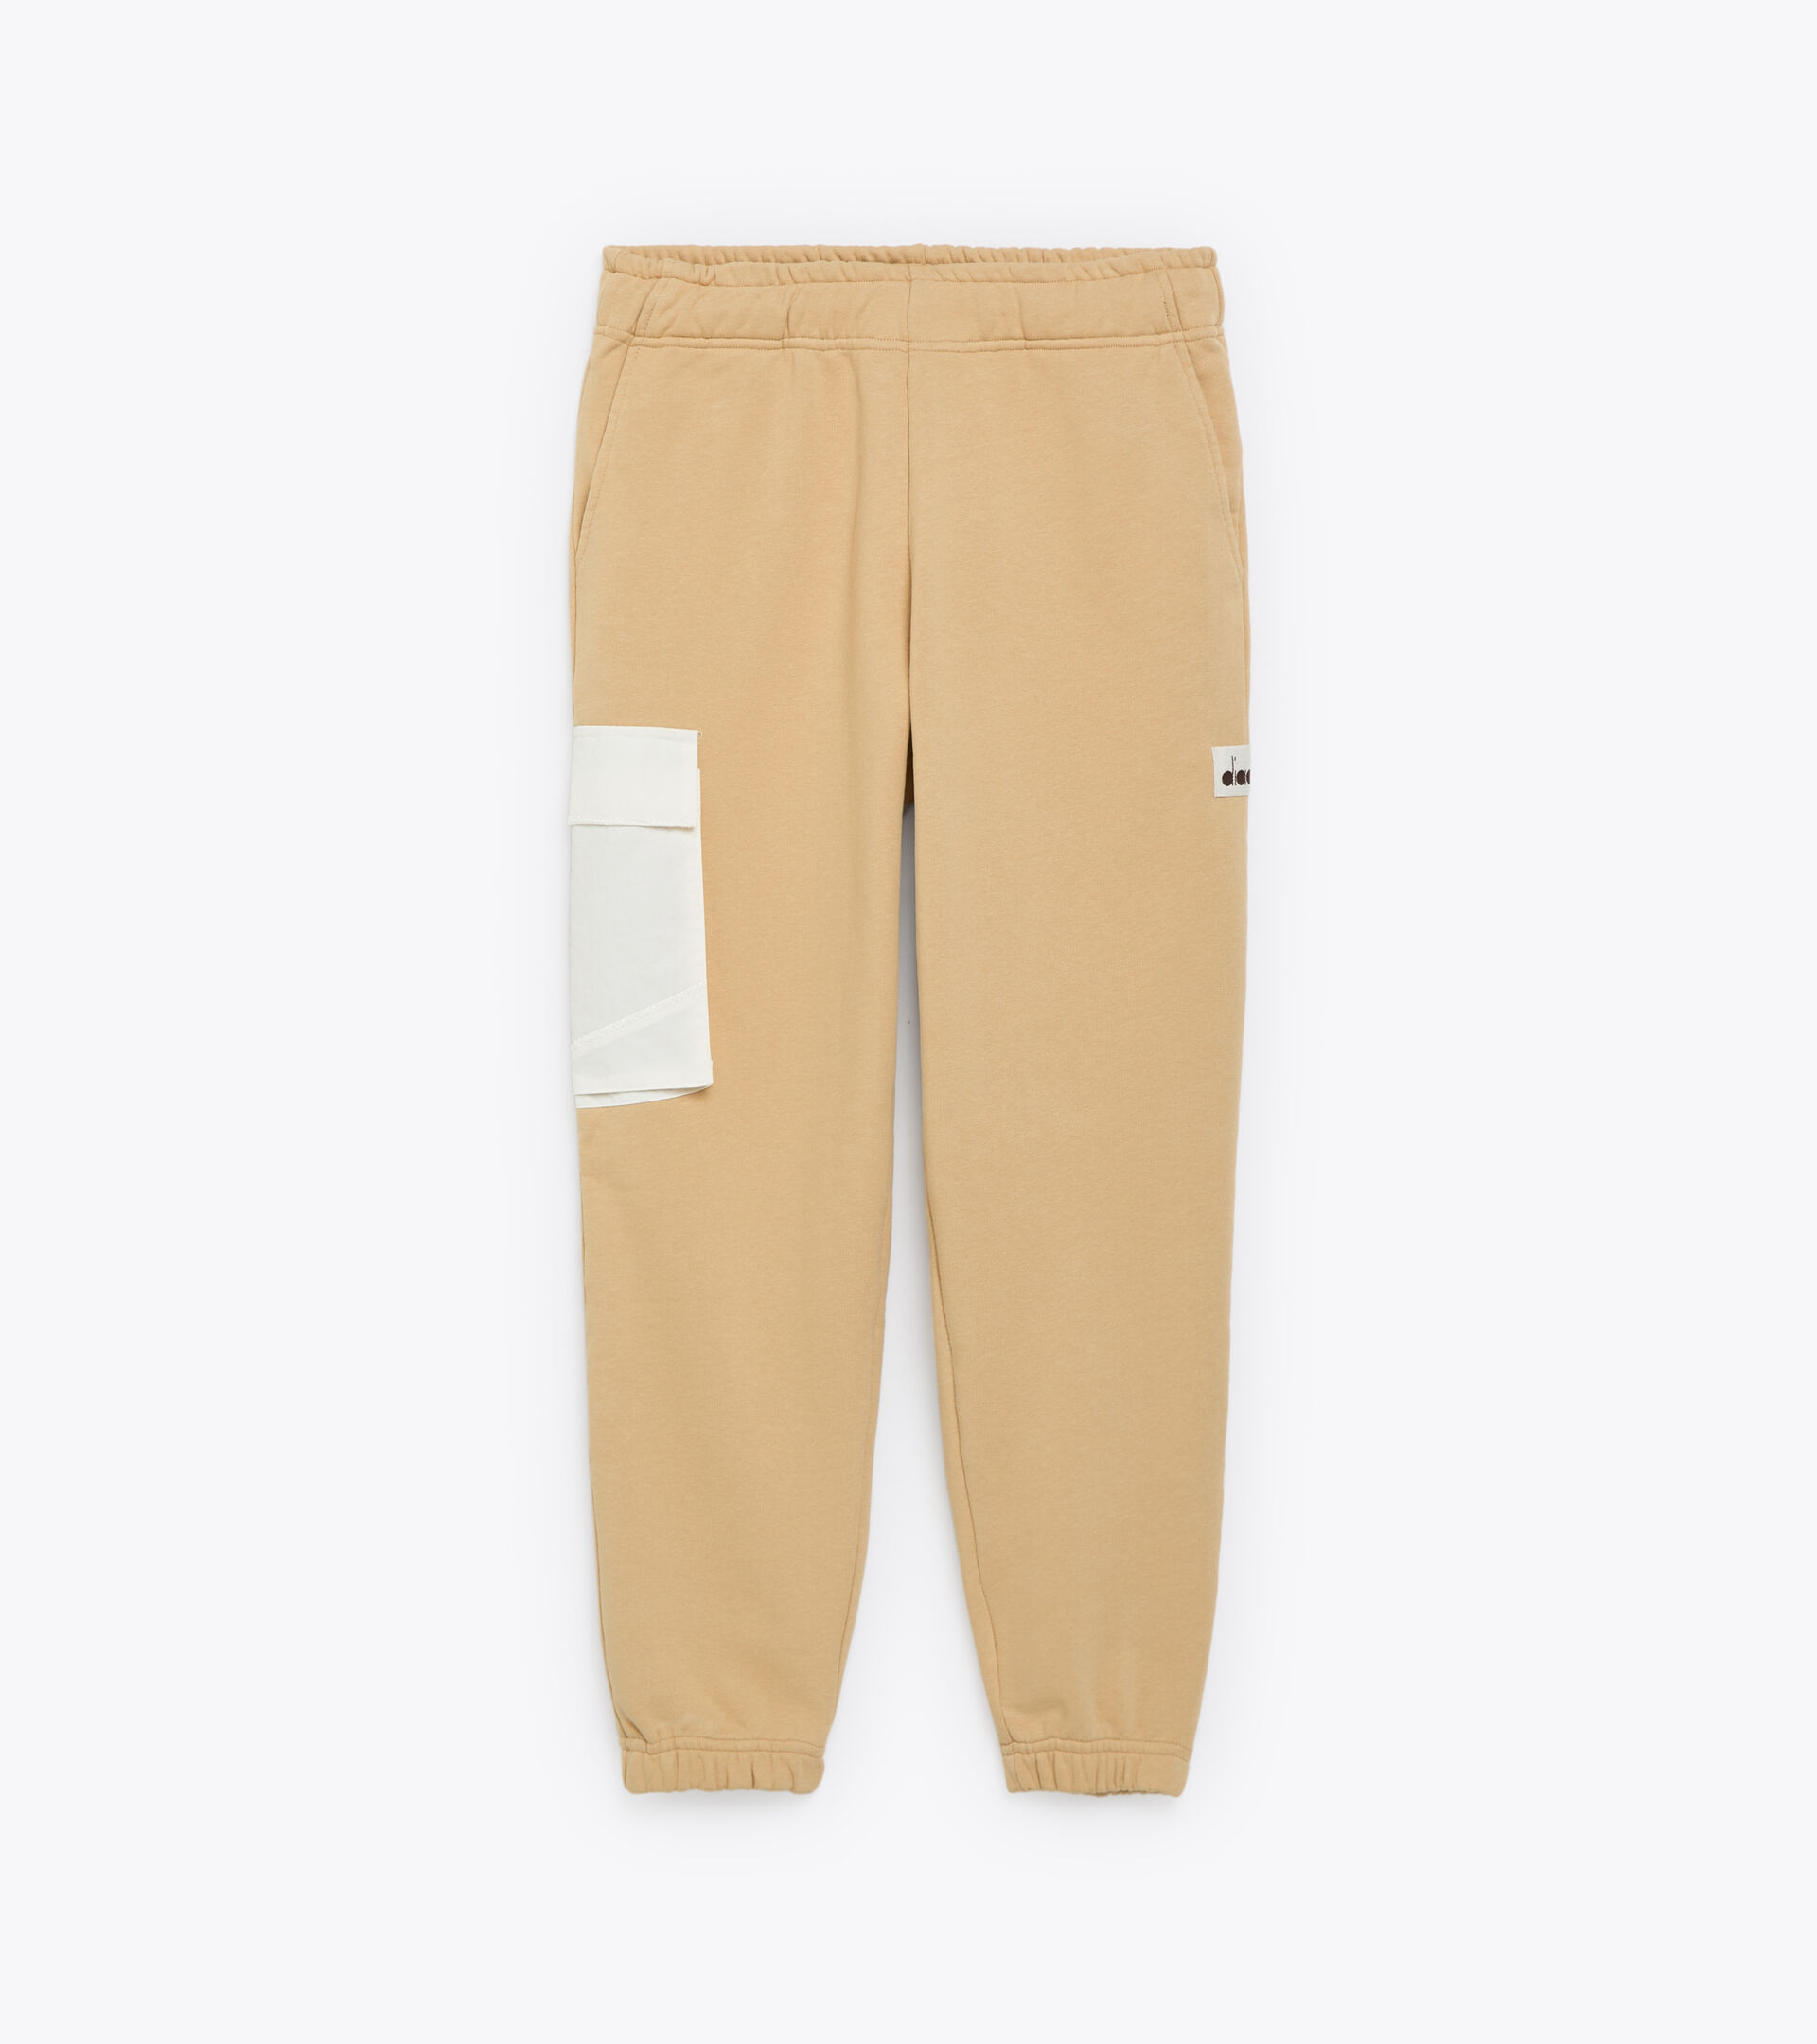 Pantalon- Made in Italy - Homme PANT 2030 SABLE CHAUD - Diadora